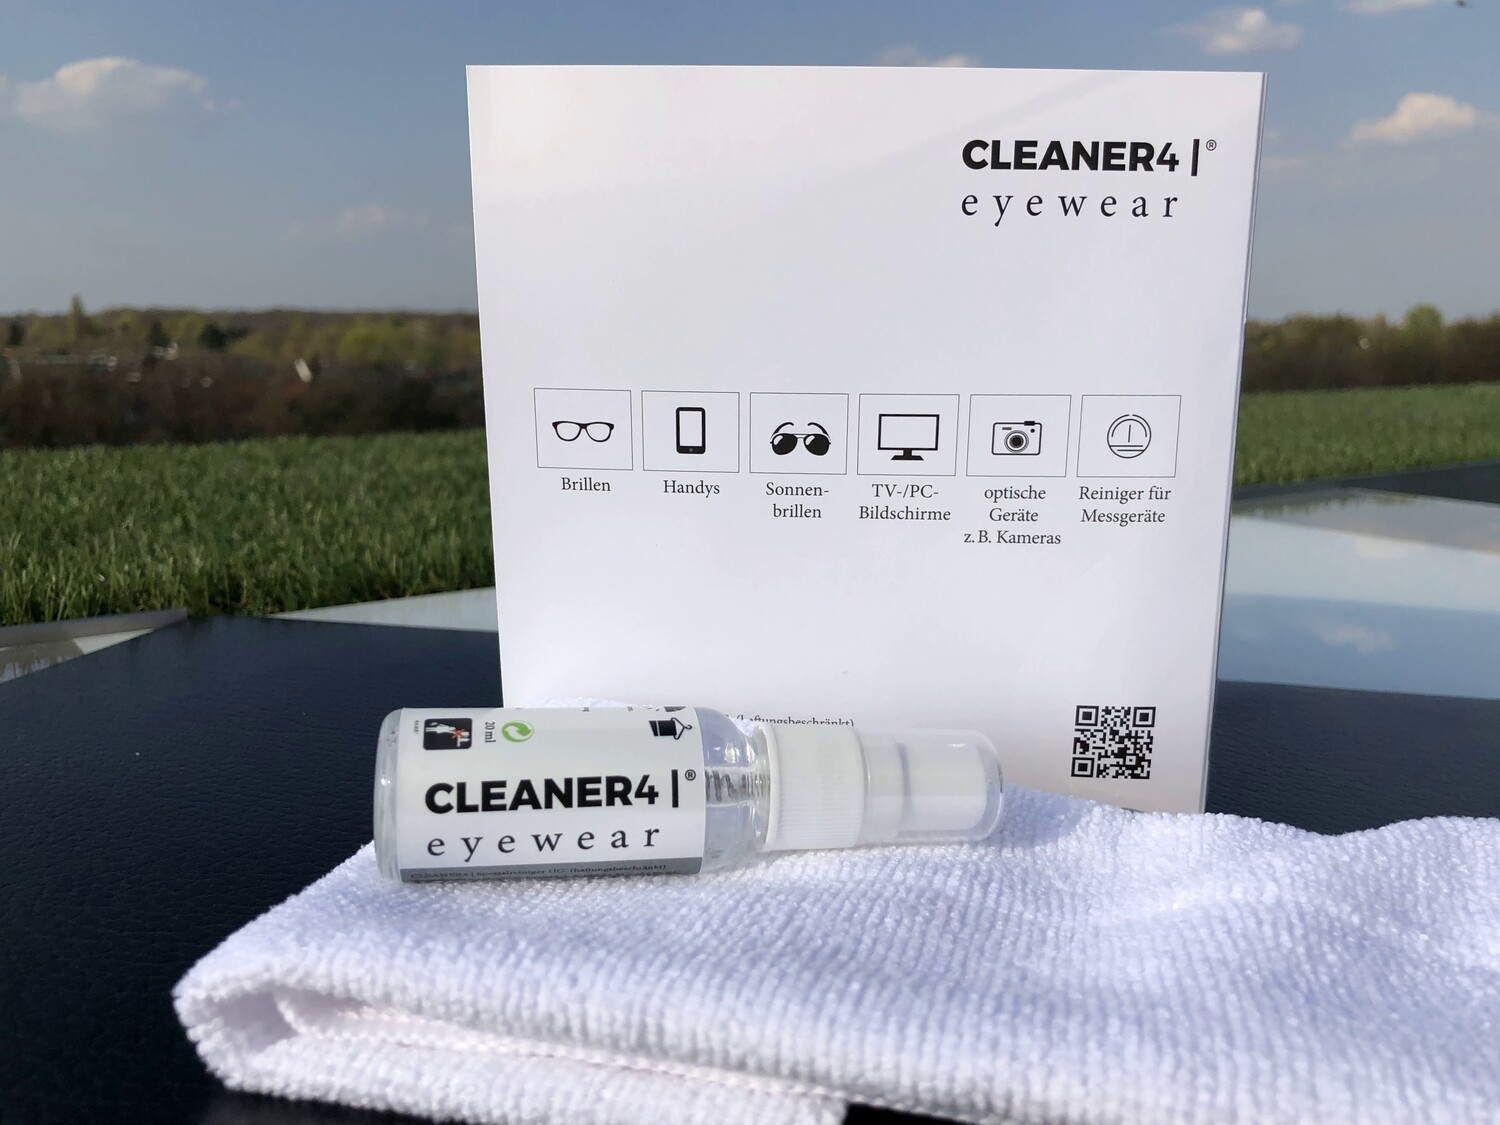 Cleaner4 eyewear